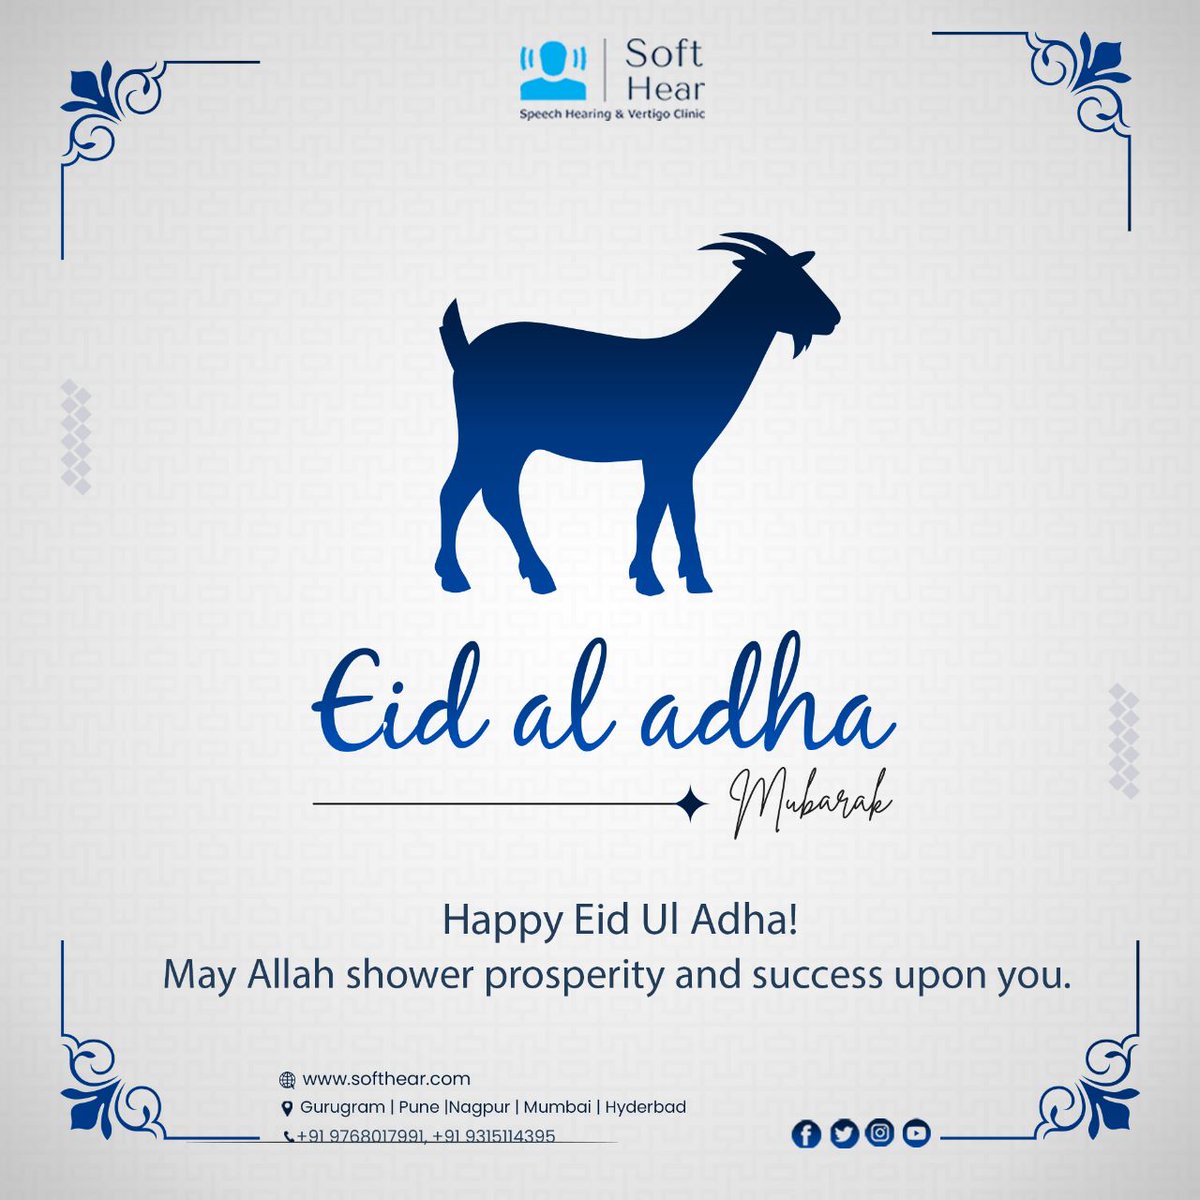 Eid's joy amplified with hearing aid bridging the gap of you hearing the sound of celebration. 
.
.
.
#EidMubarak #EidAlAdha #EidCelebrations #EidJoy #EidReflections #EidCommunity #EidUnity #EidCharity #EidMemories
#EidGratitude #softhear